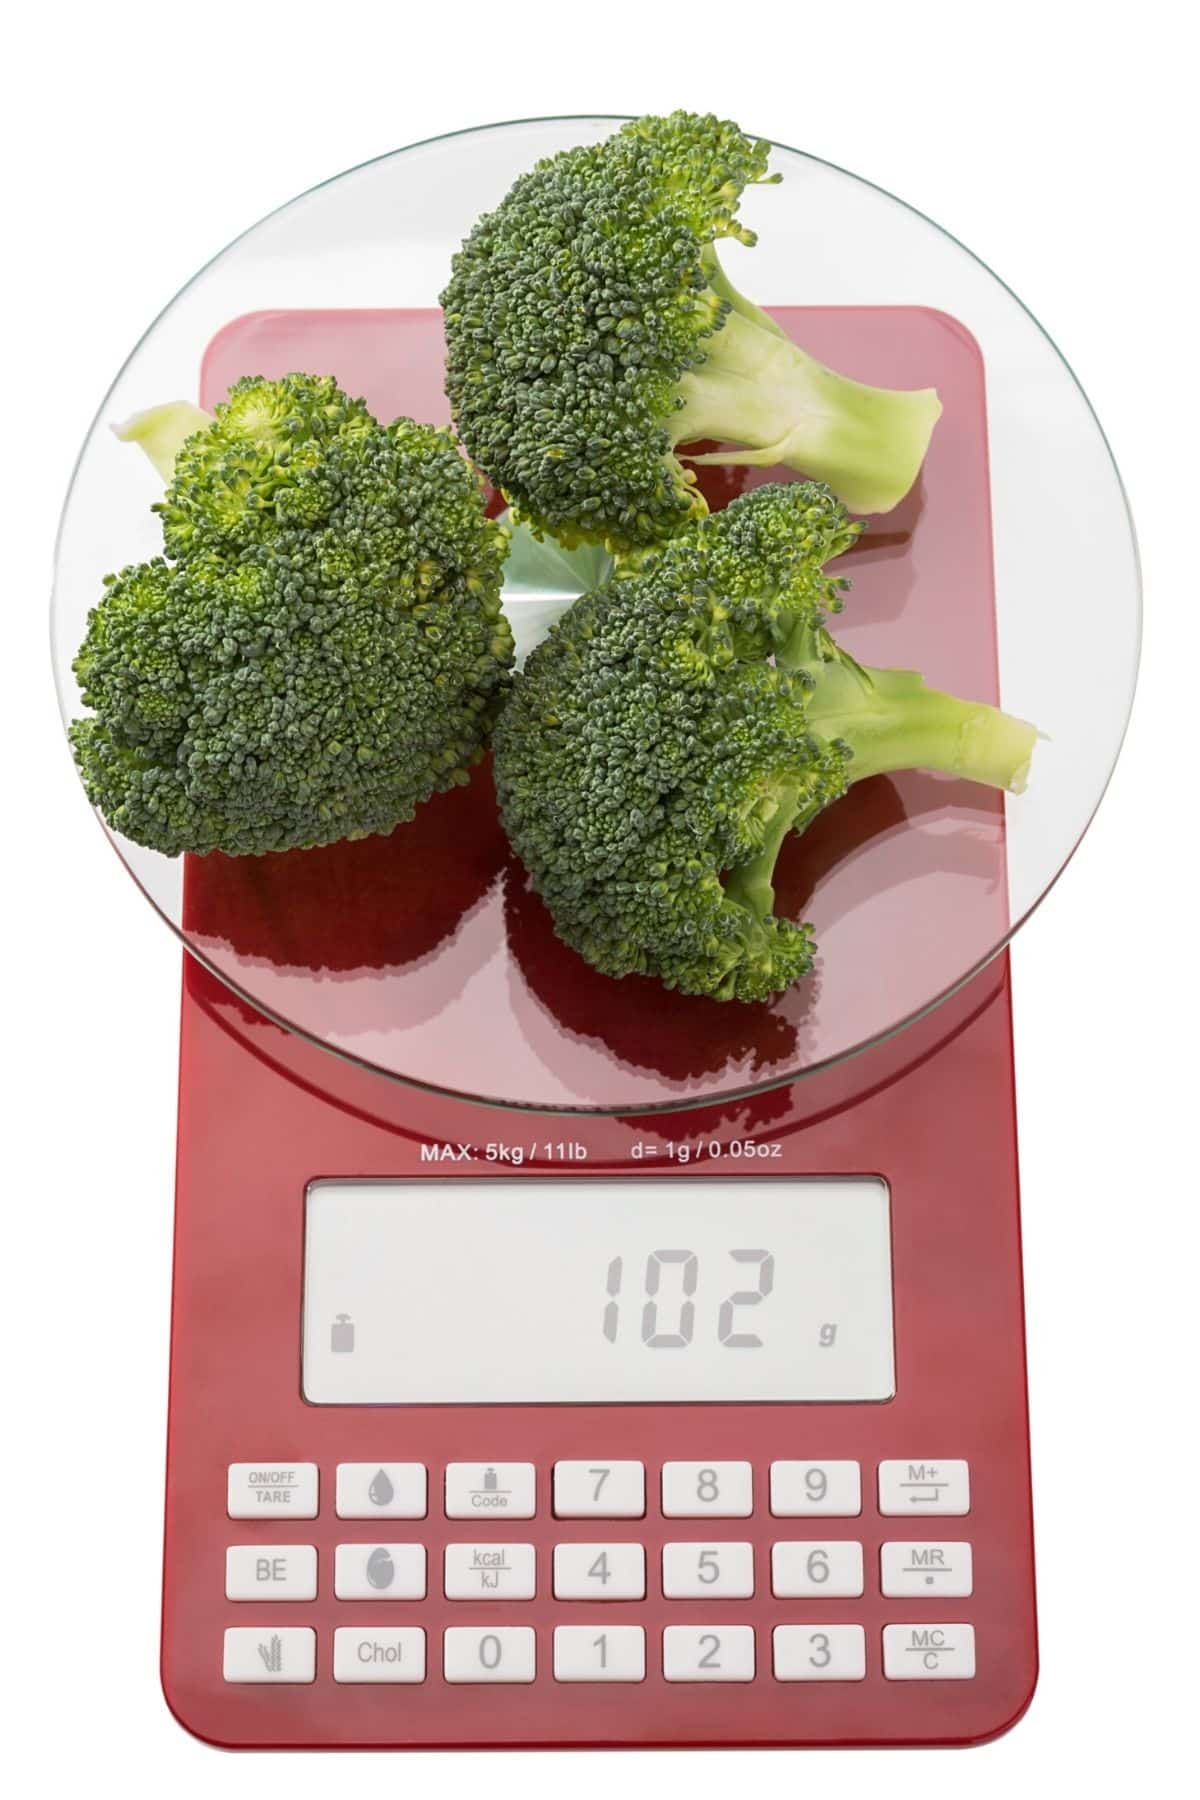 broccoli on a food scale.